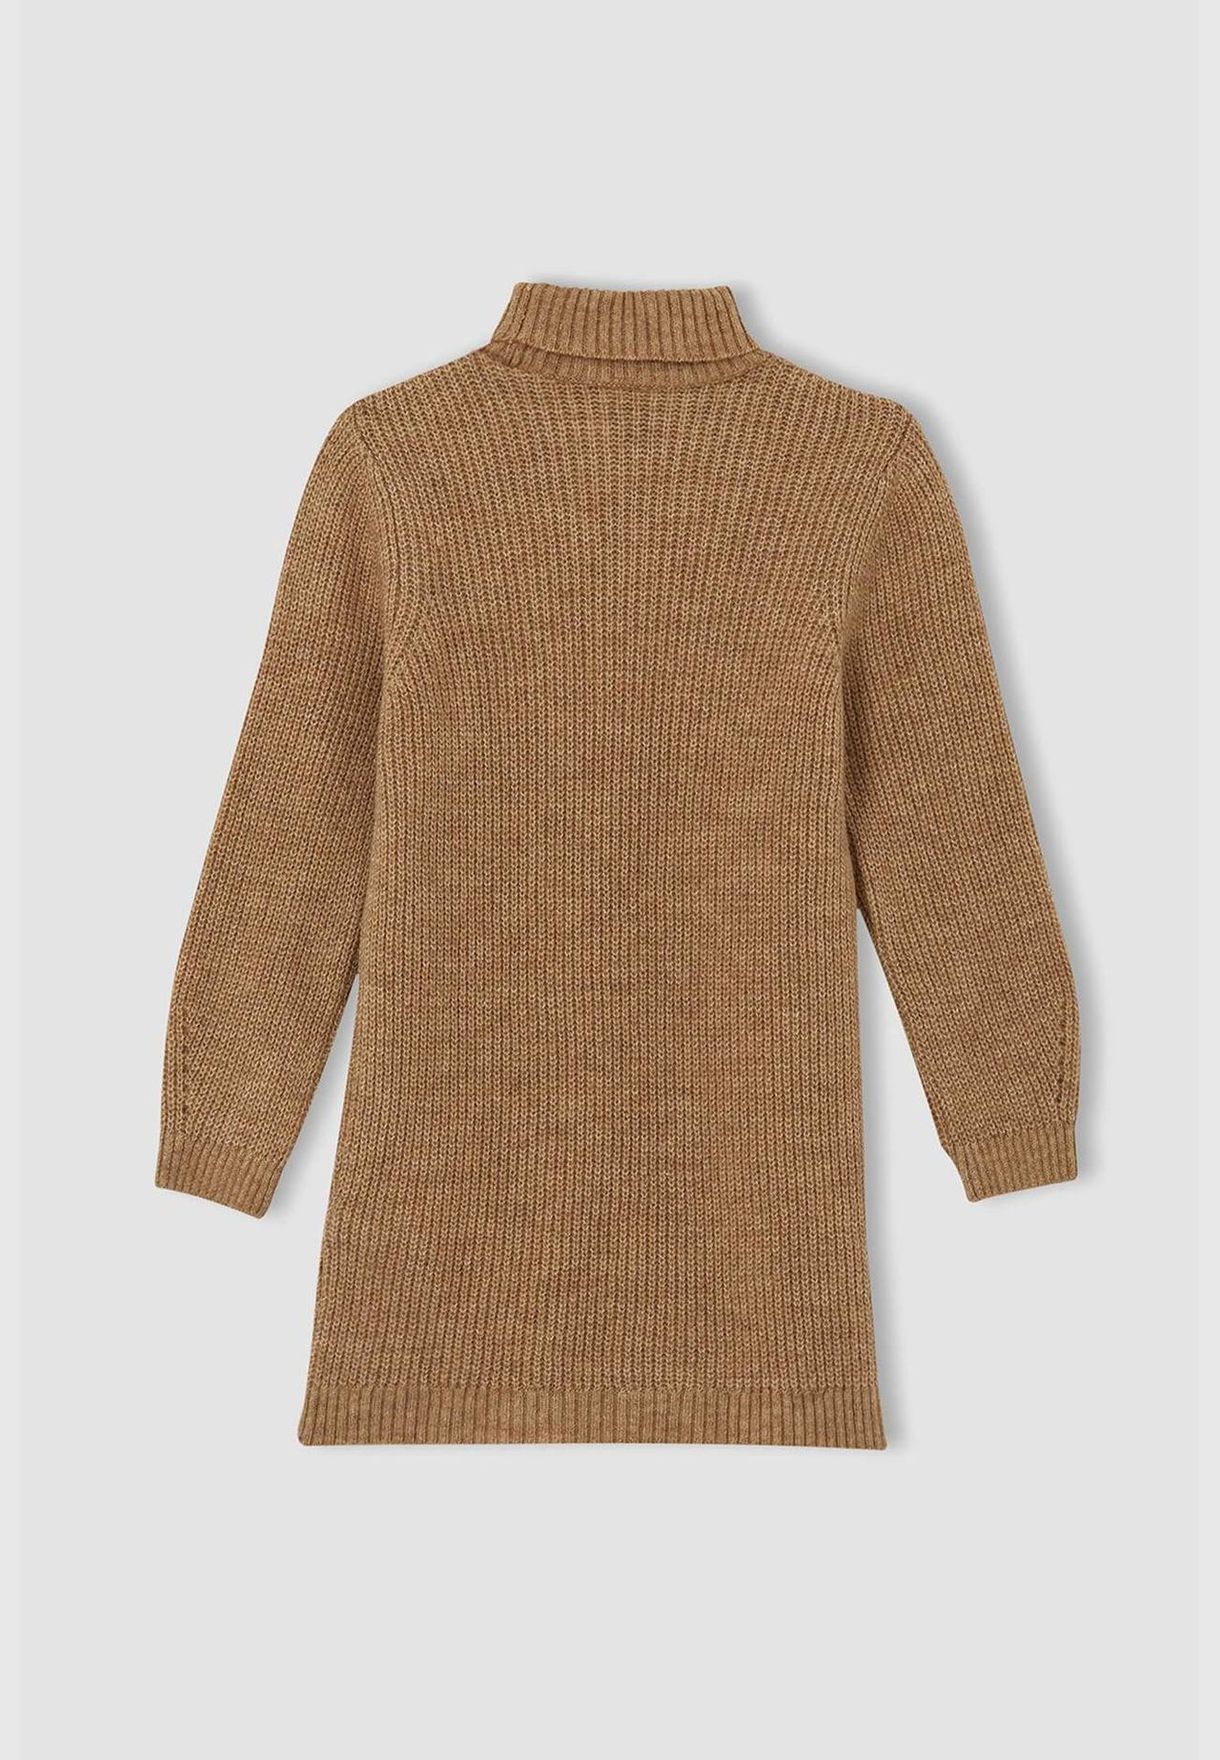 Long Sleeve Rib Knit Turtleneck Knit Sweater Dress